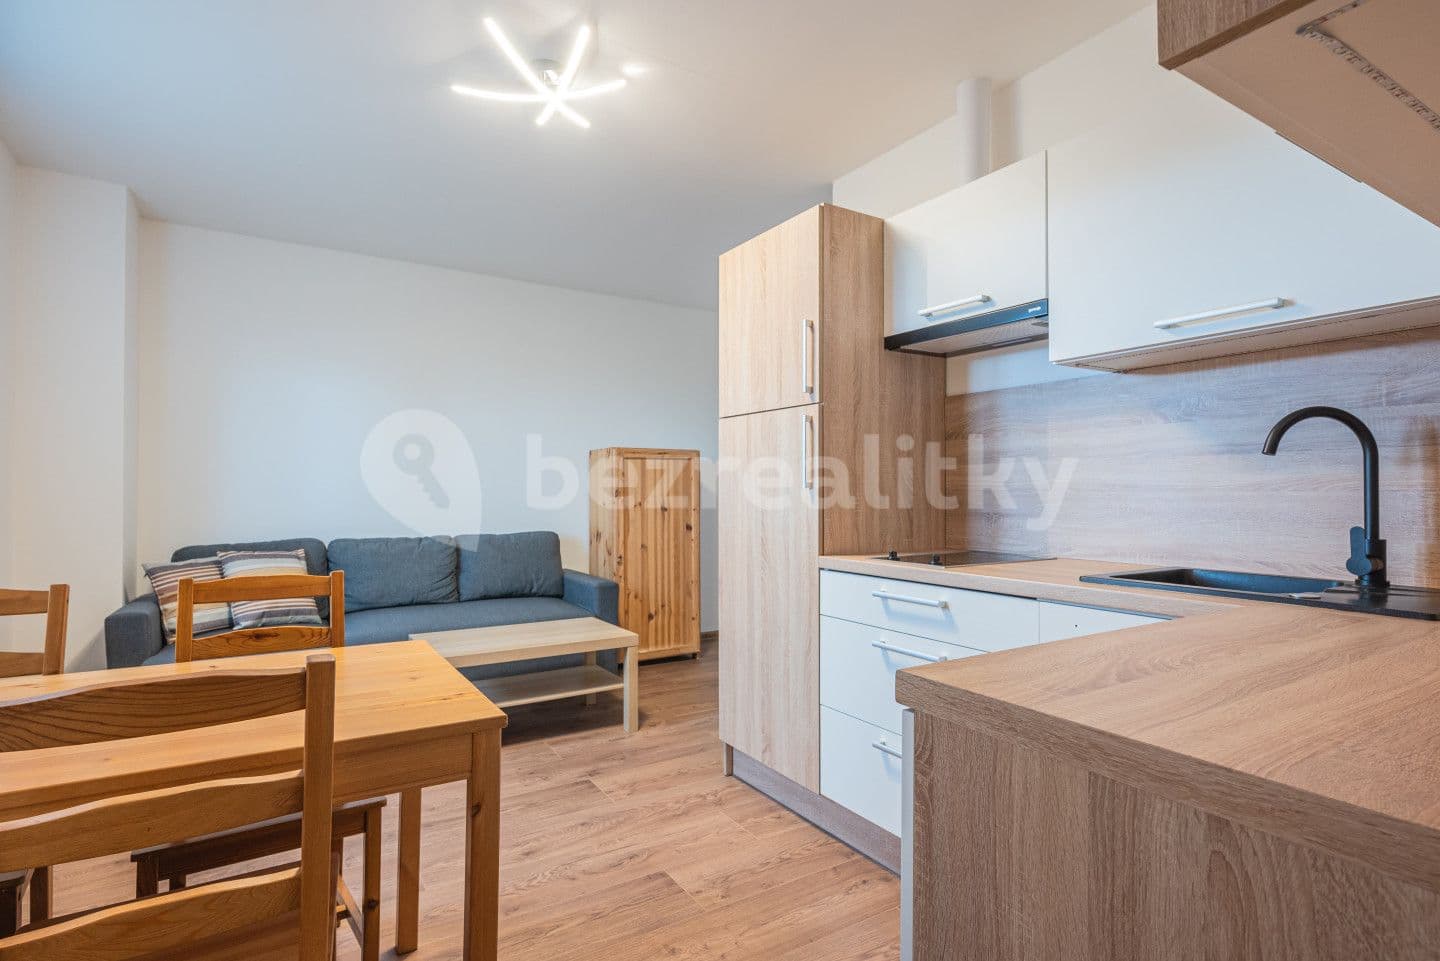 Predaj bytu 2-izbový 40 m², Staré Město, Moravskoslezský kraj